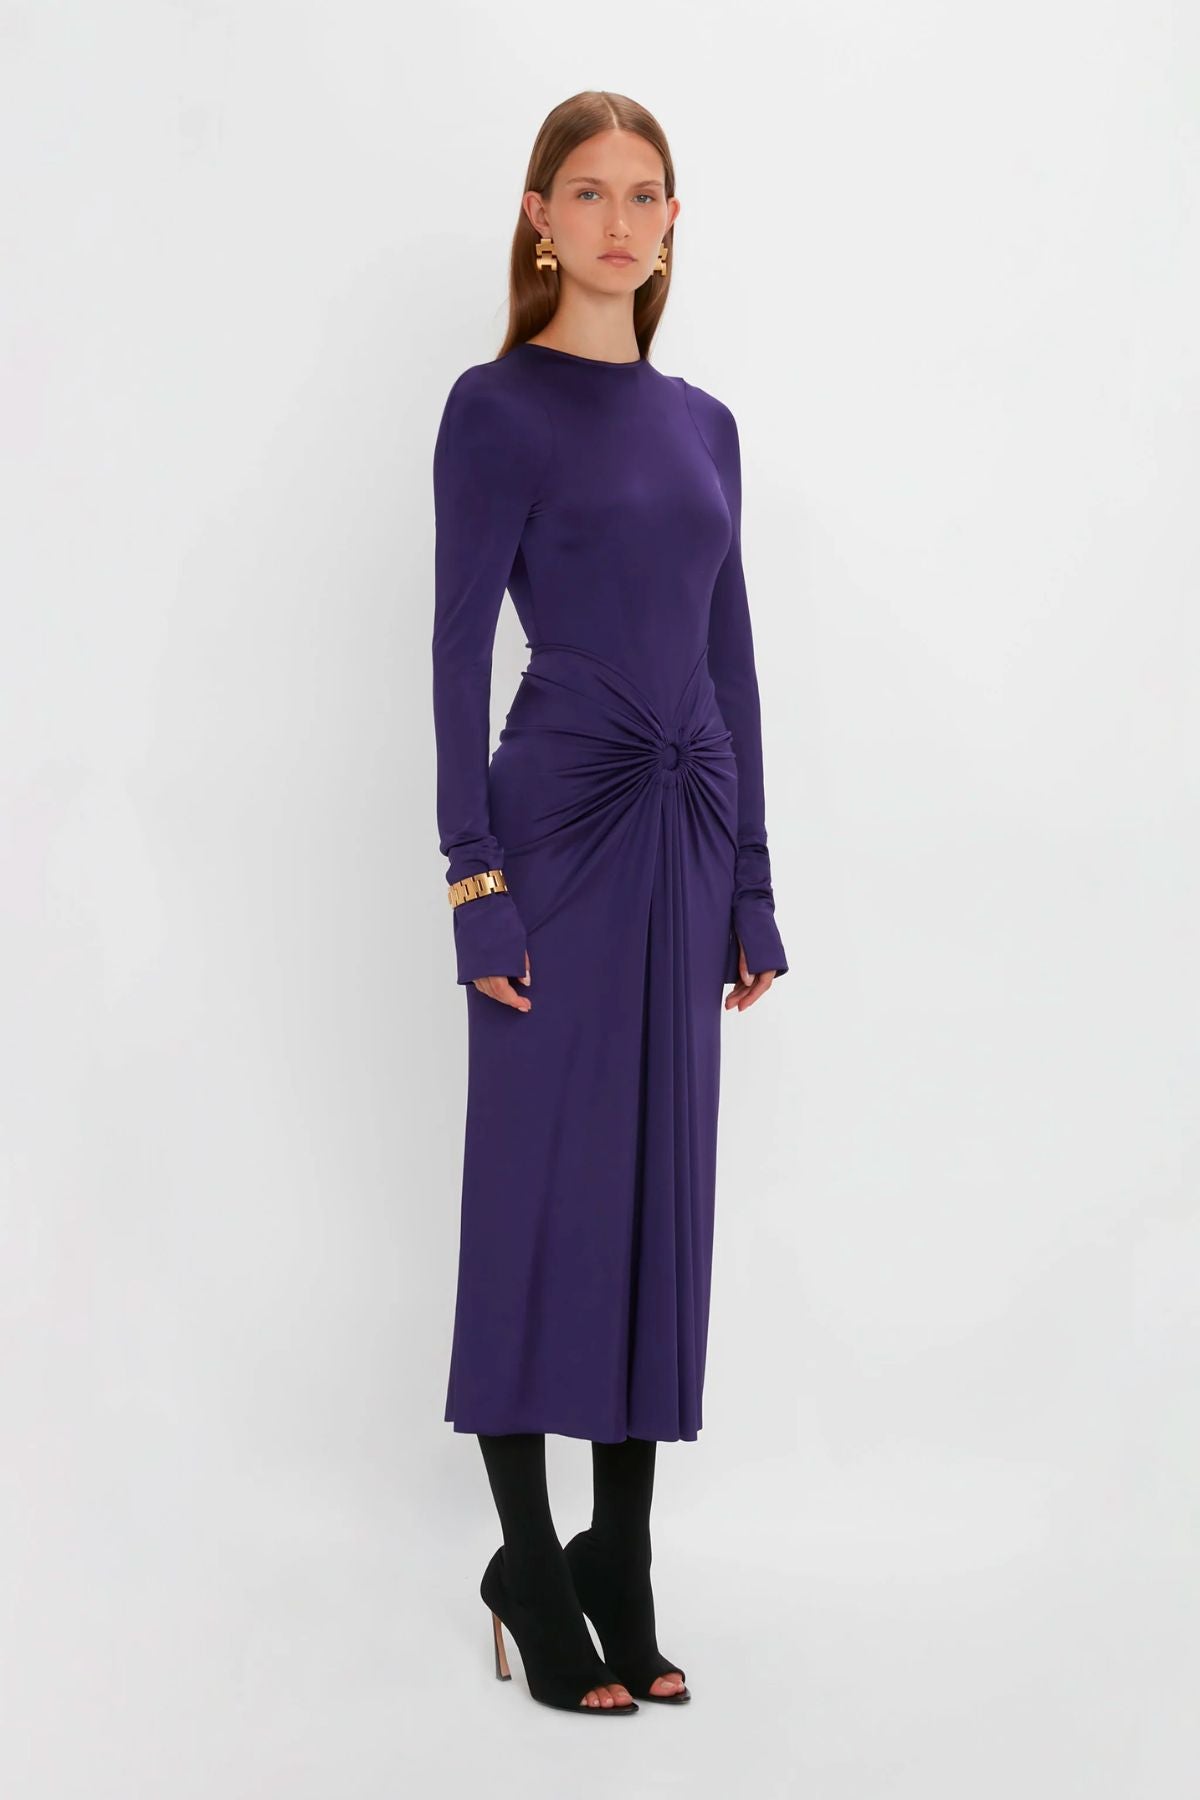 Victoria Beckham Gathered Midi Dress - Ultraviolet